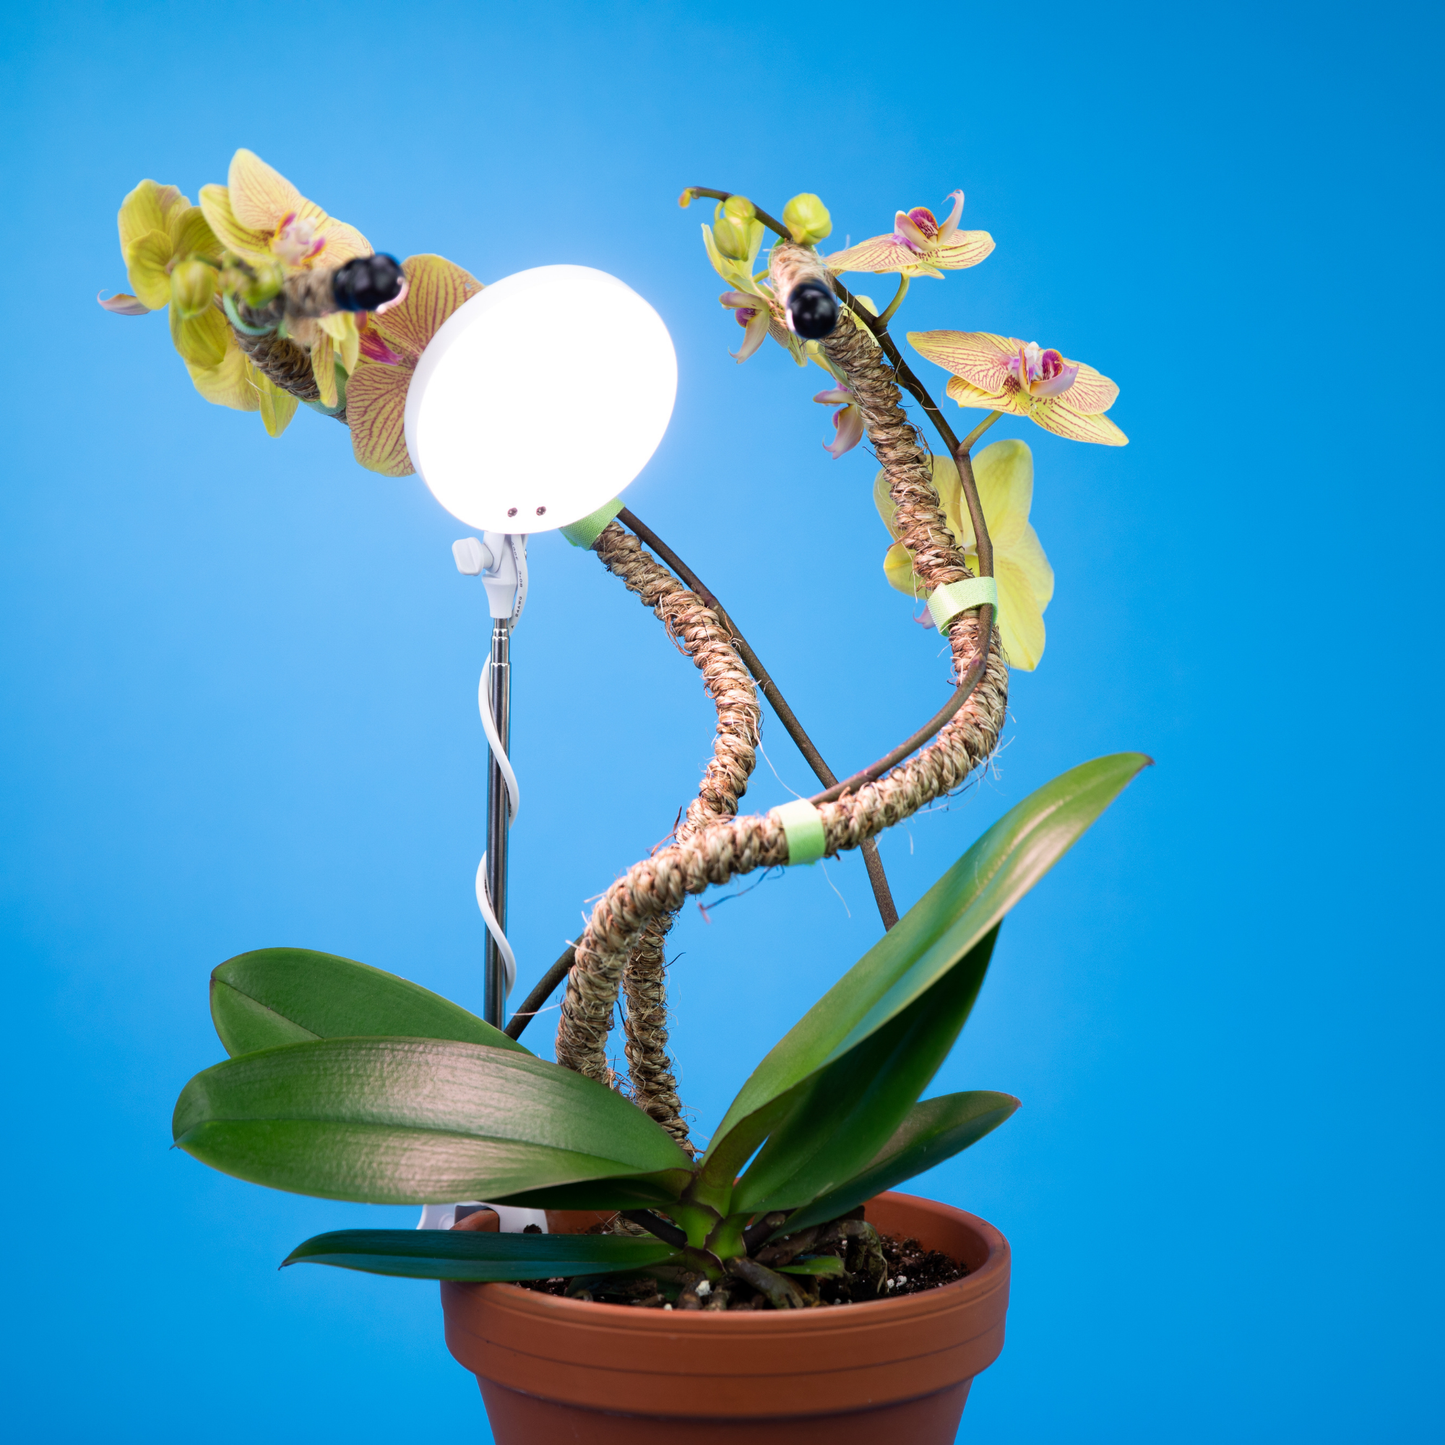 Adjustable LED Plant Light: White